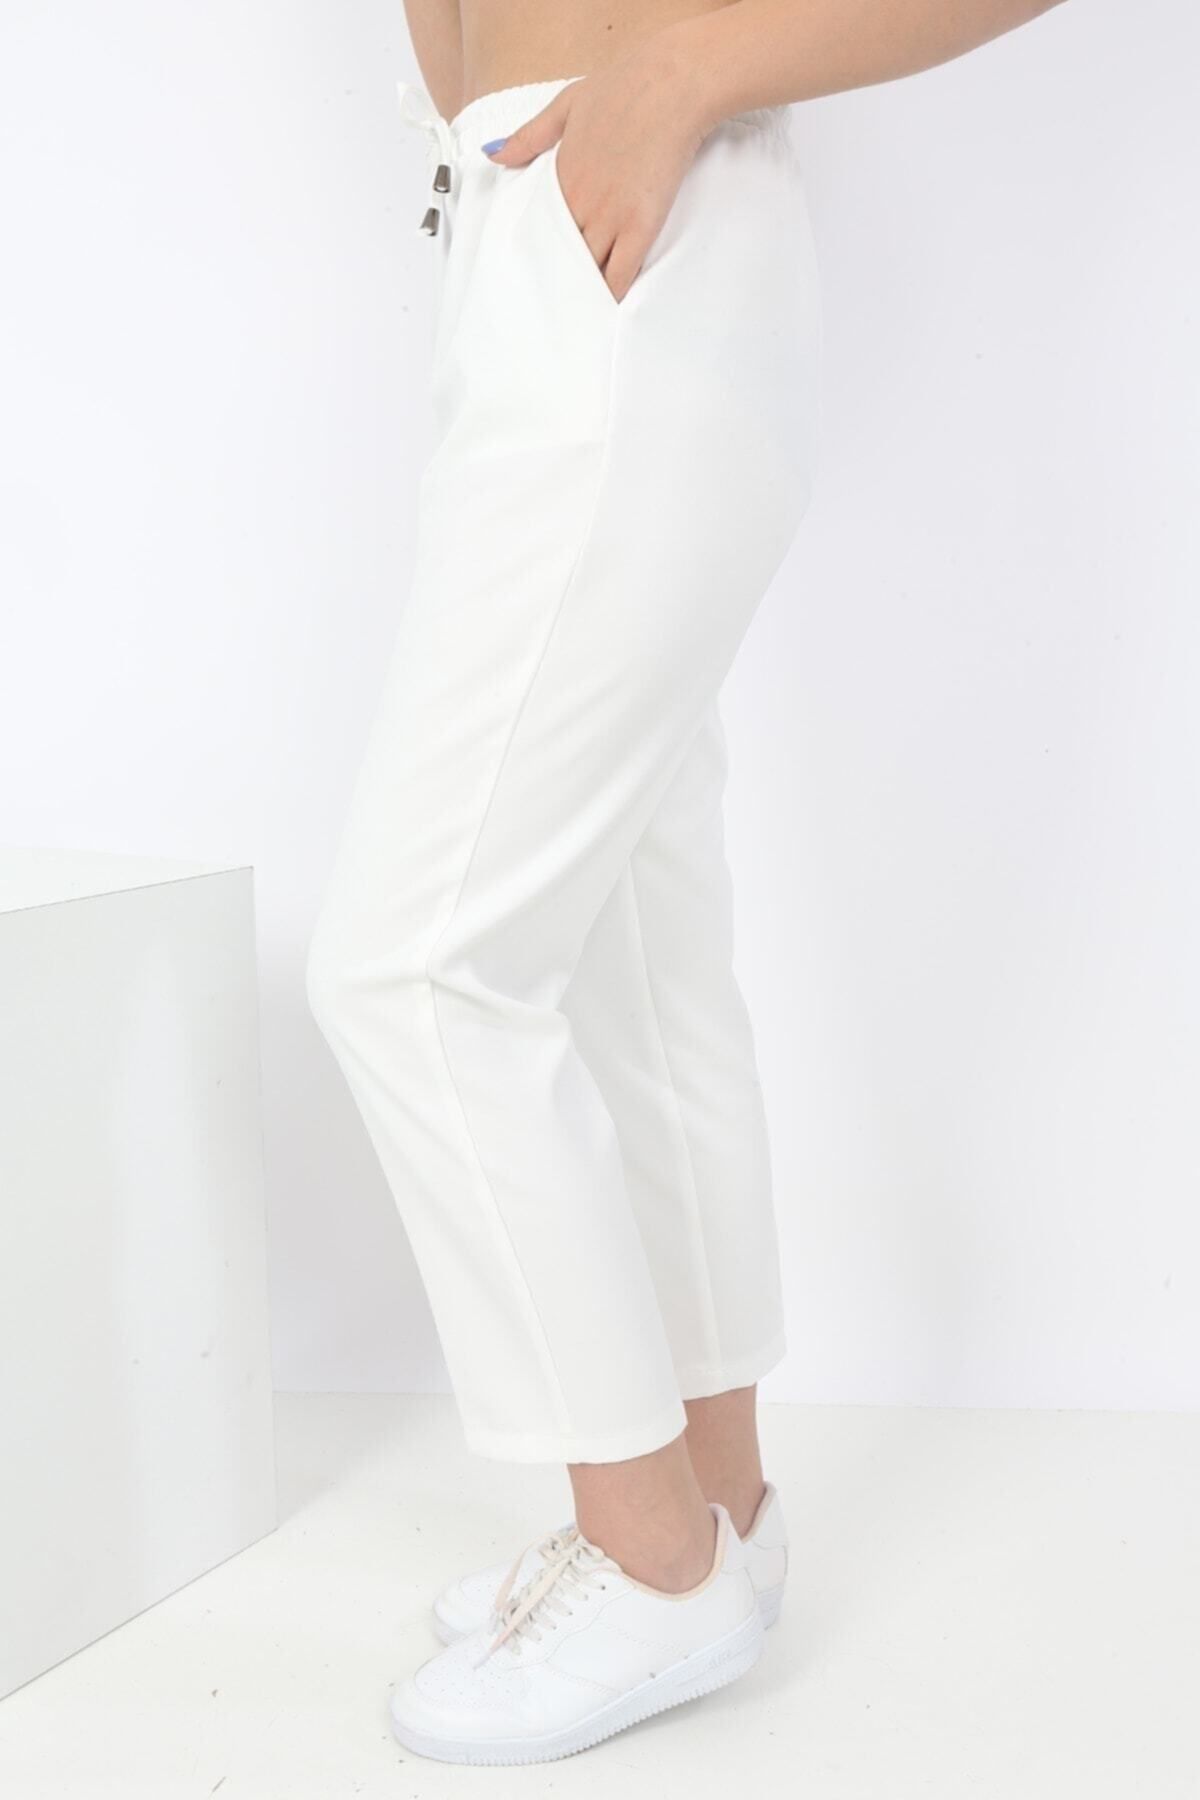 freedom fashion Kadın Beyaz Double Kumaş Beli Lastikli Dar Paça Pantolon